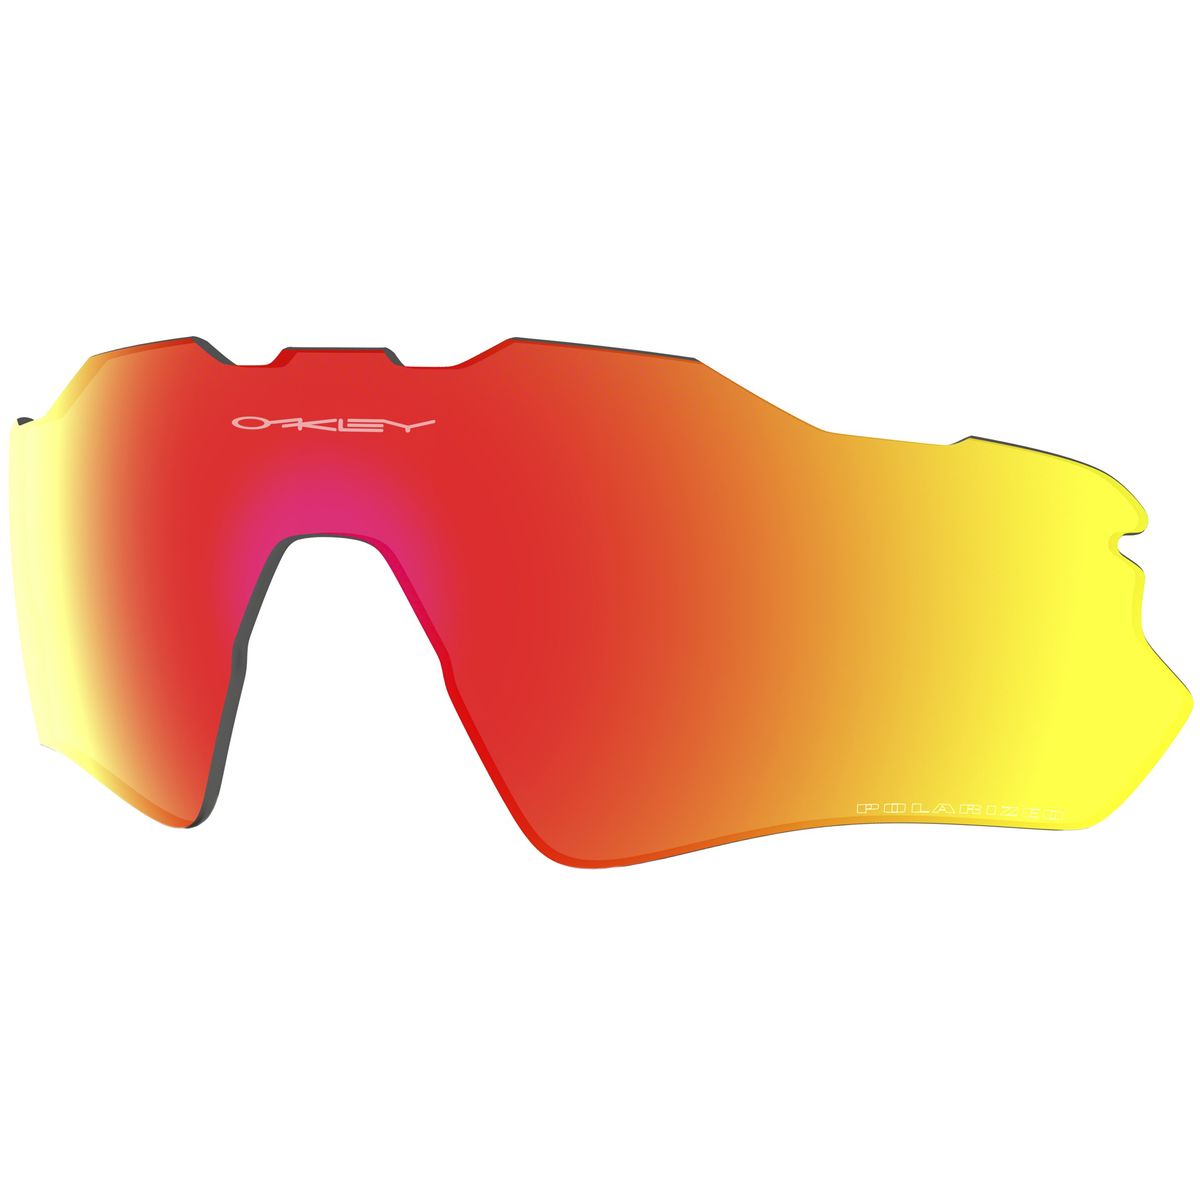 Oakley Radar EV Path Sunglasses Replacement Lens